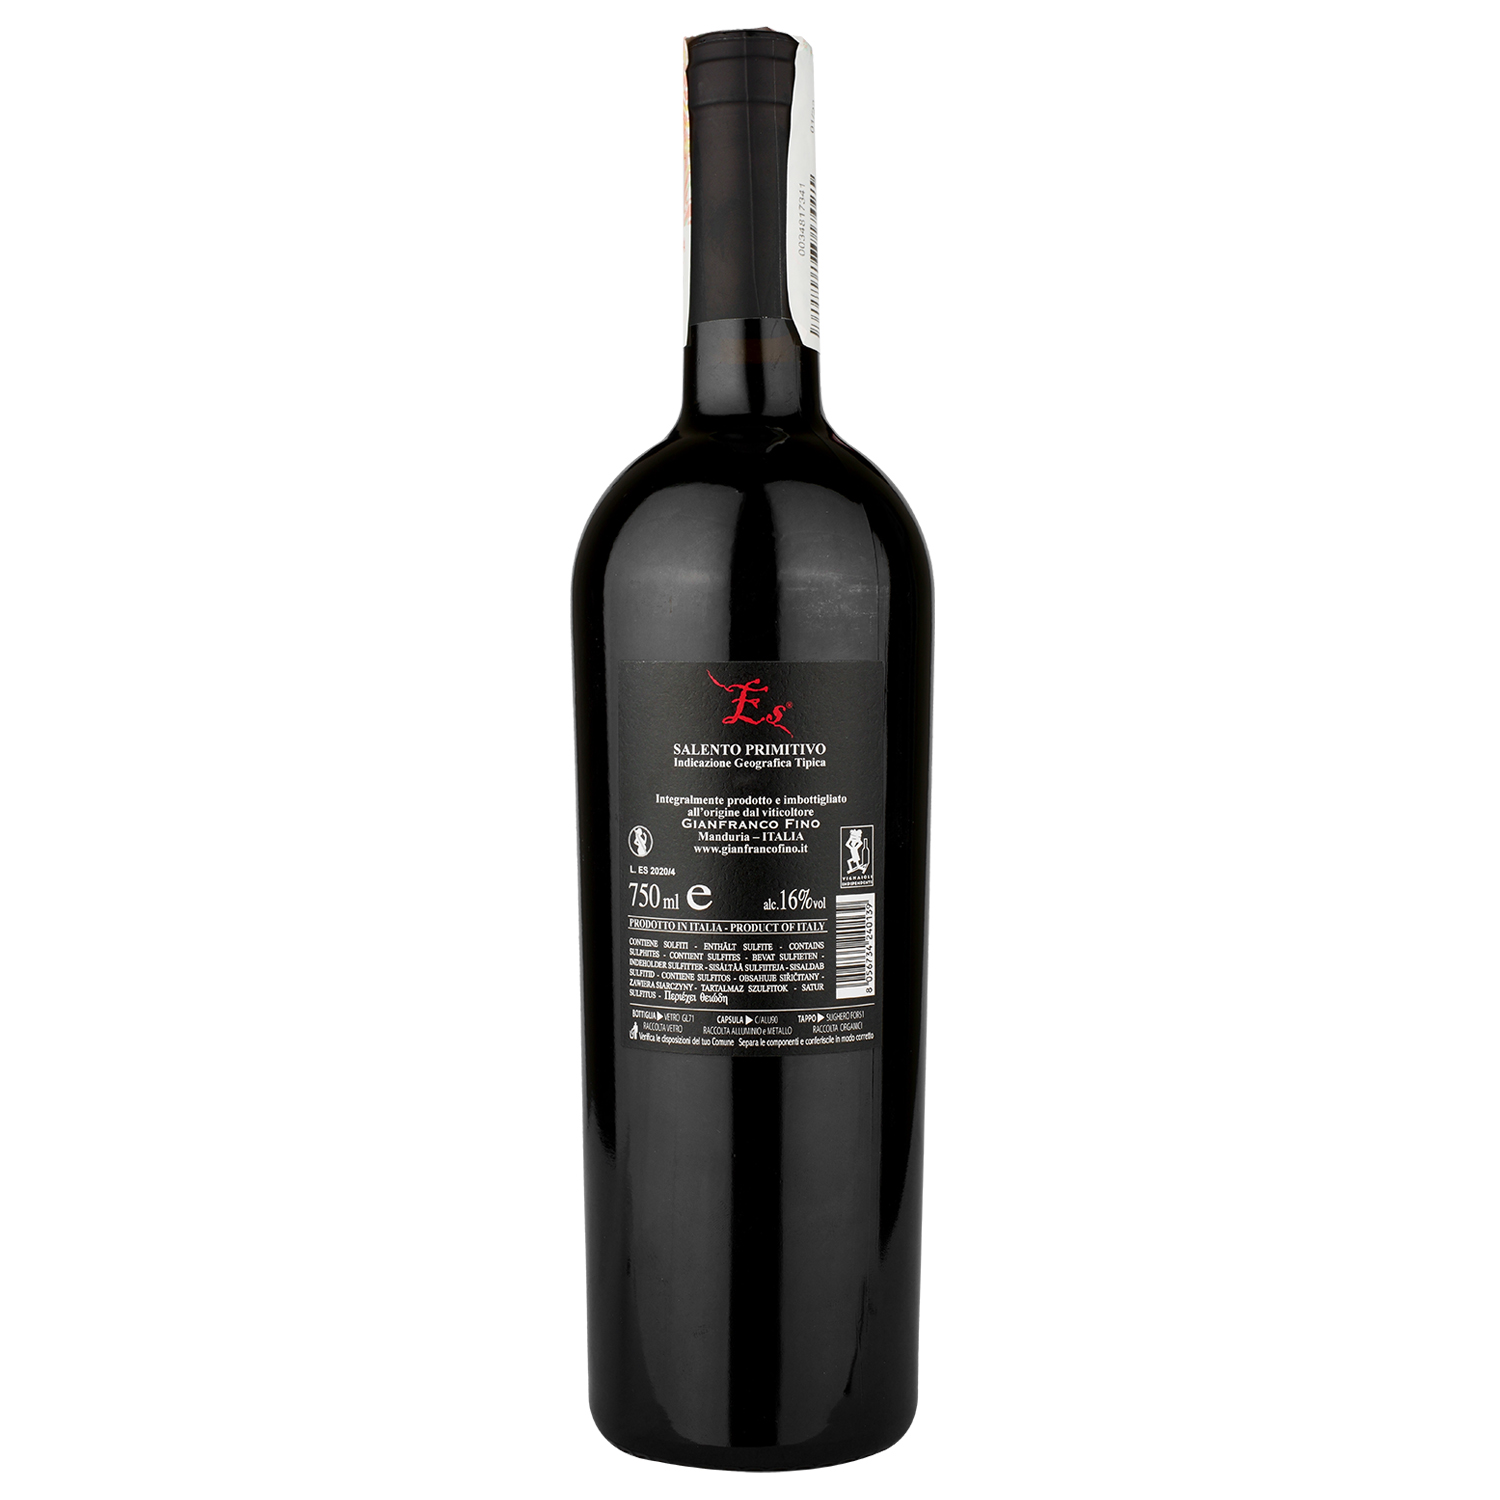 Вино Gianfranco Fino Es Salento Primitivo 2020, красное, сухое, 0,75 л - фото 2